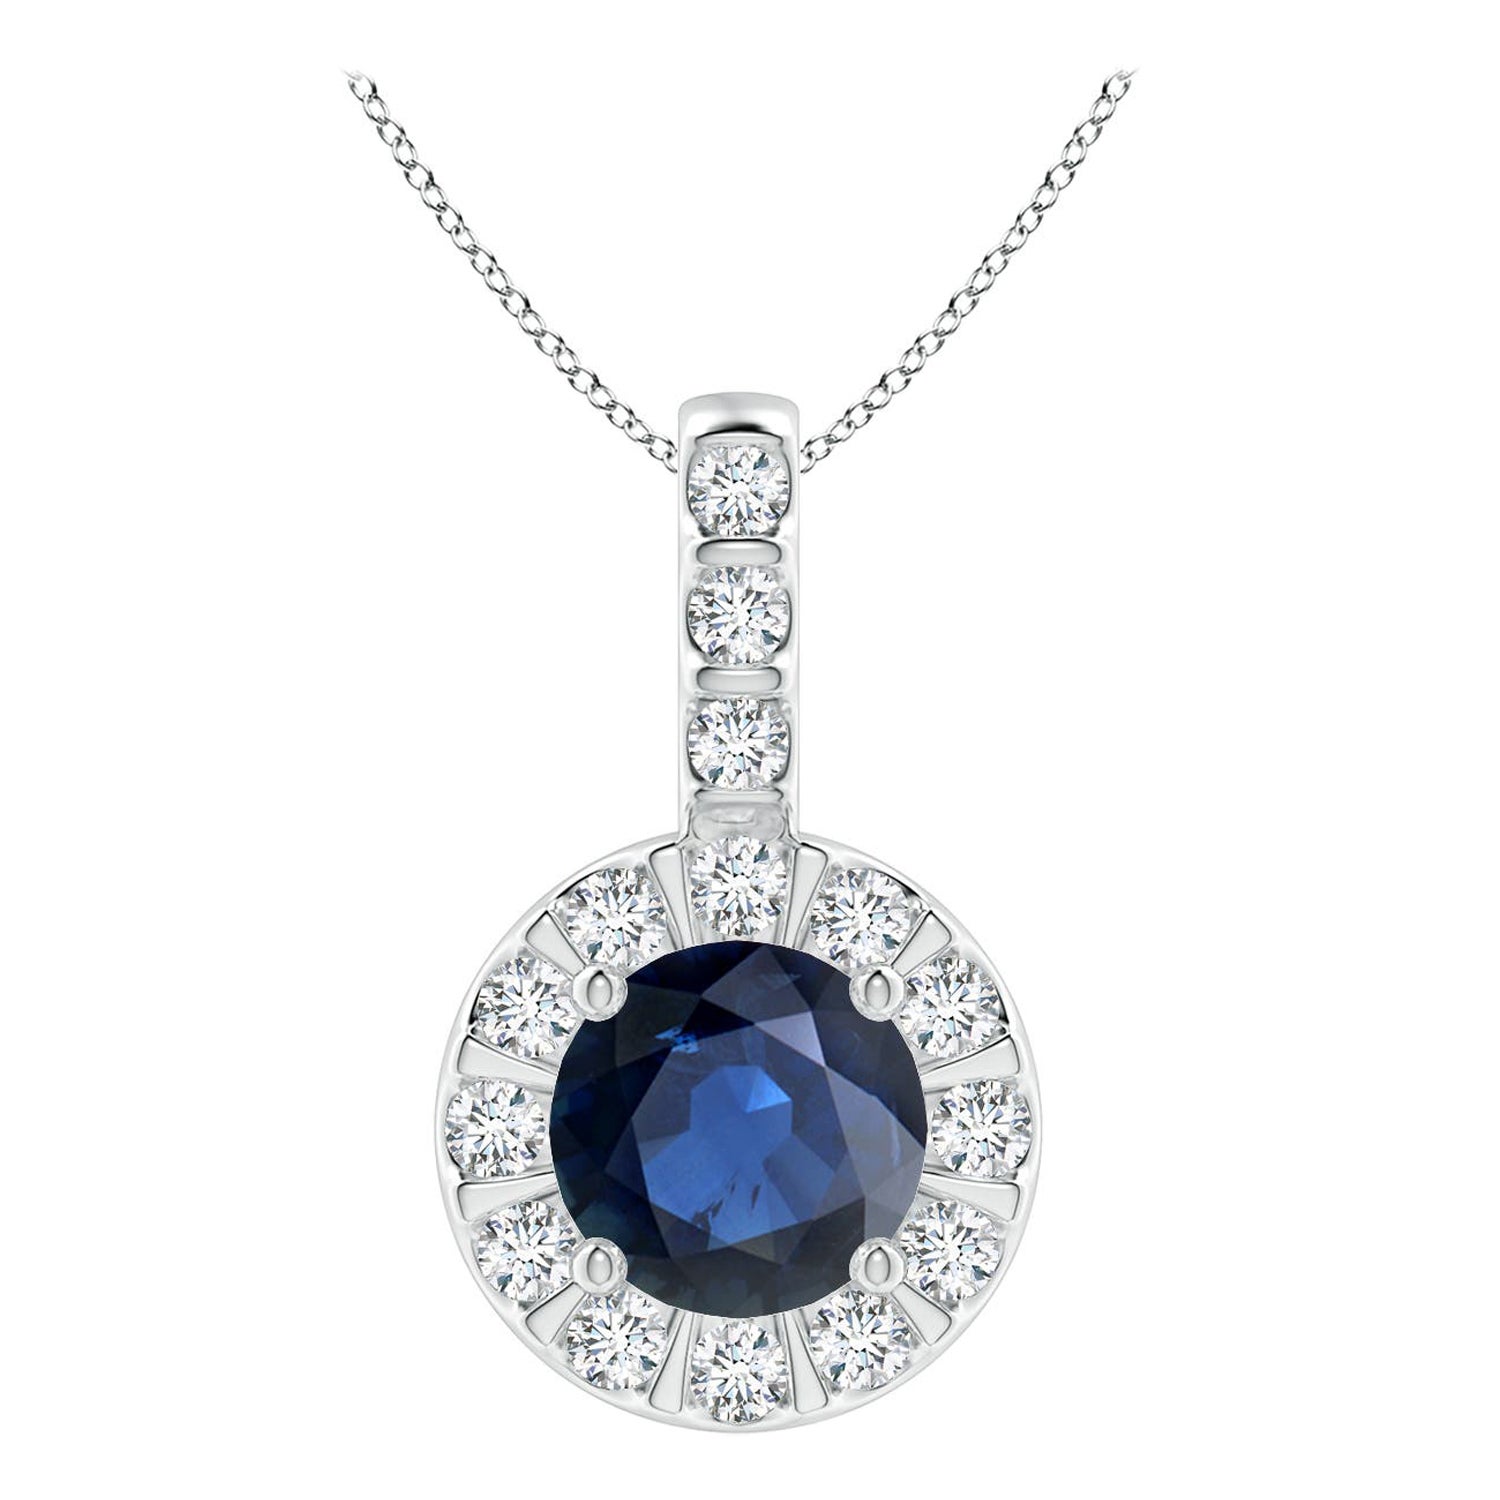 ANGARA Natural 1ct Blue Sapphire Pendant with Diamond Halo in Platinum